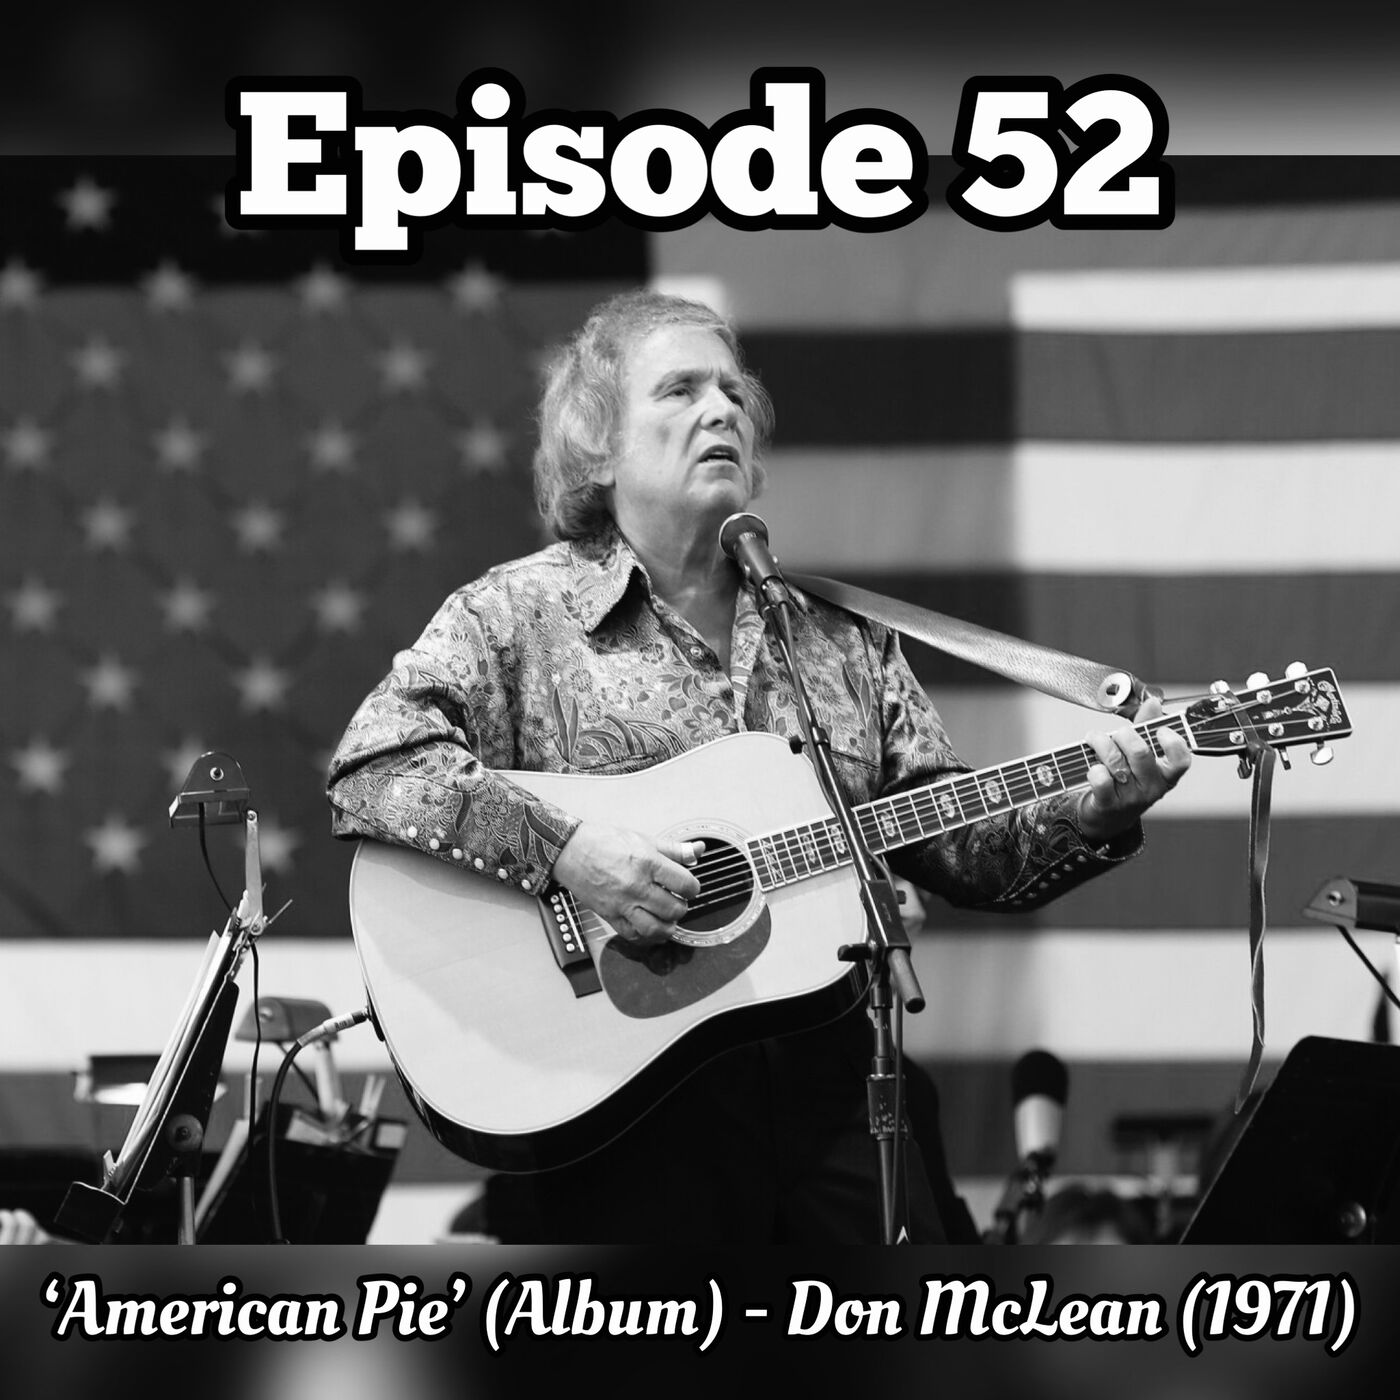 52. ’American Pie’ (Album) - Don McLean (1971)